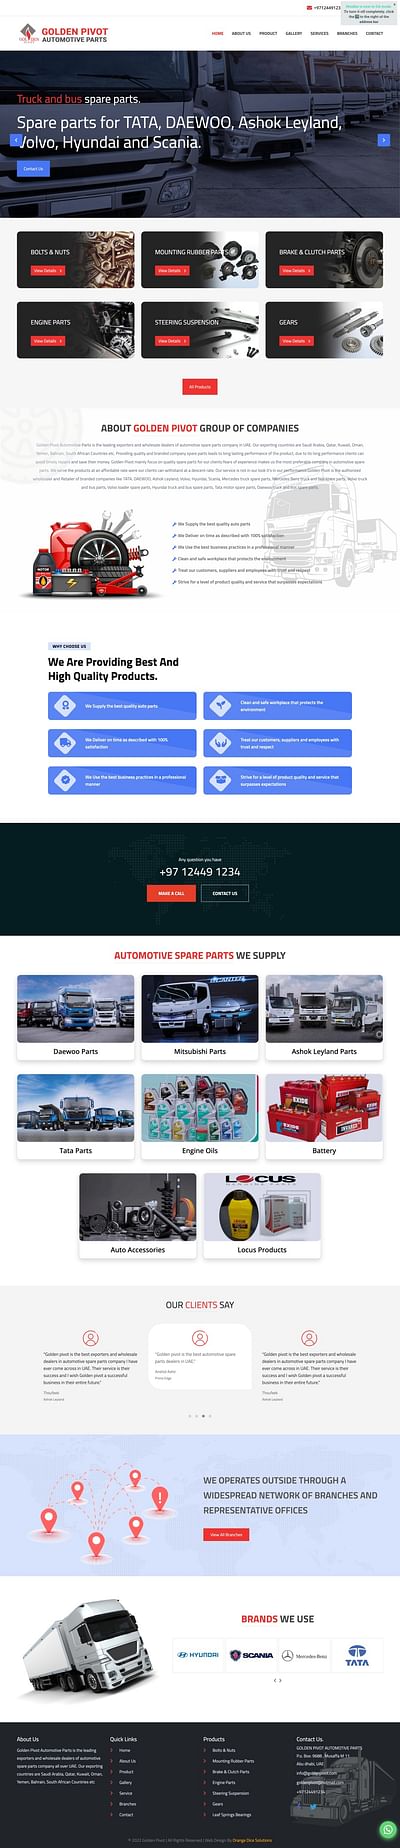 Website designed for Goldenpivot automobile - Applicazione web